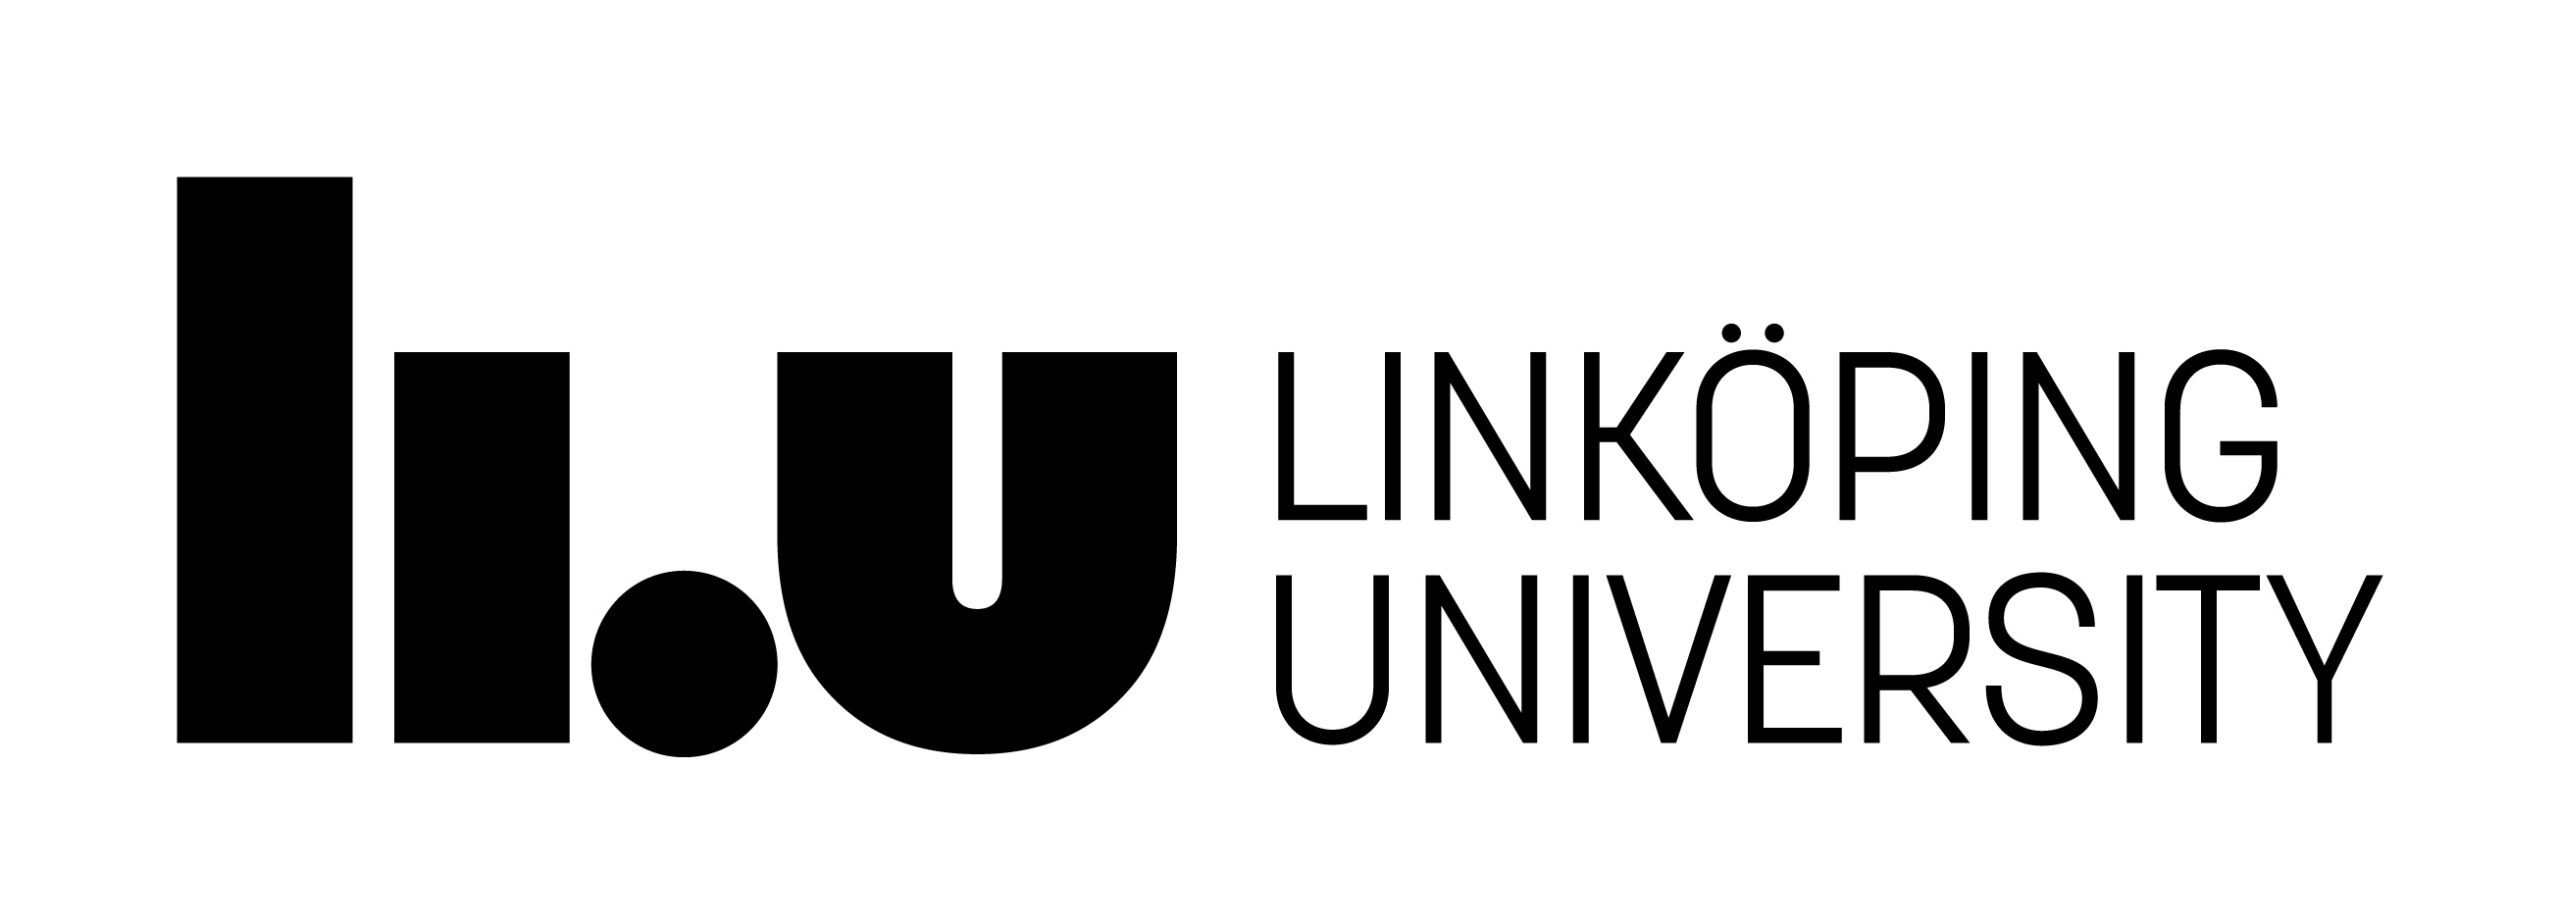 96 Linkoping University scaled